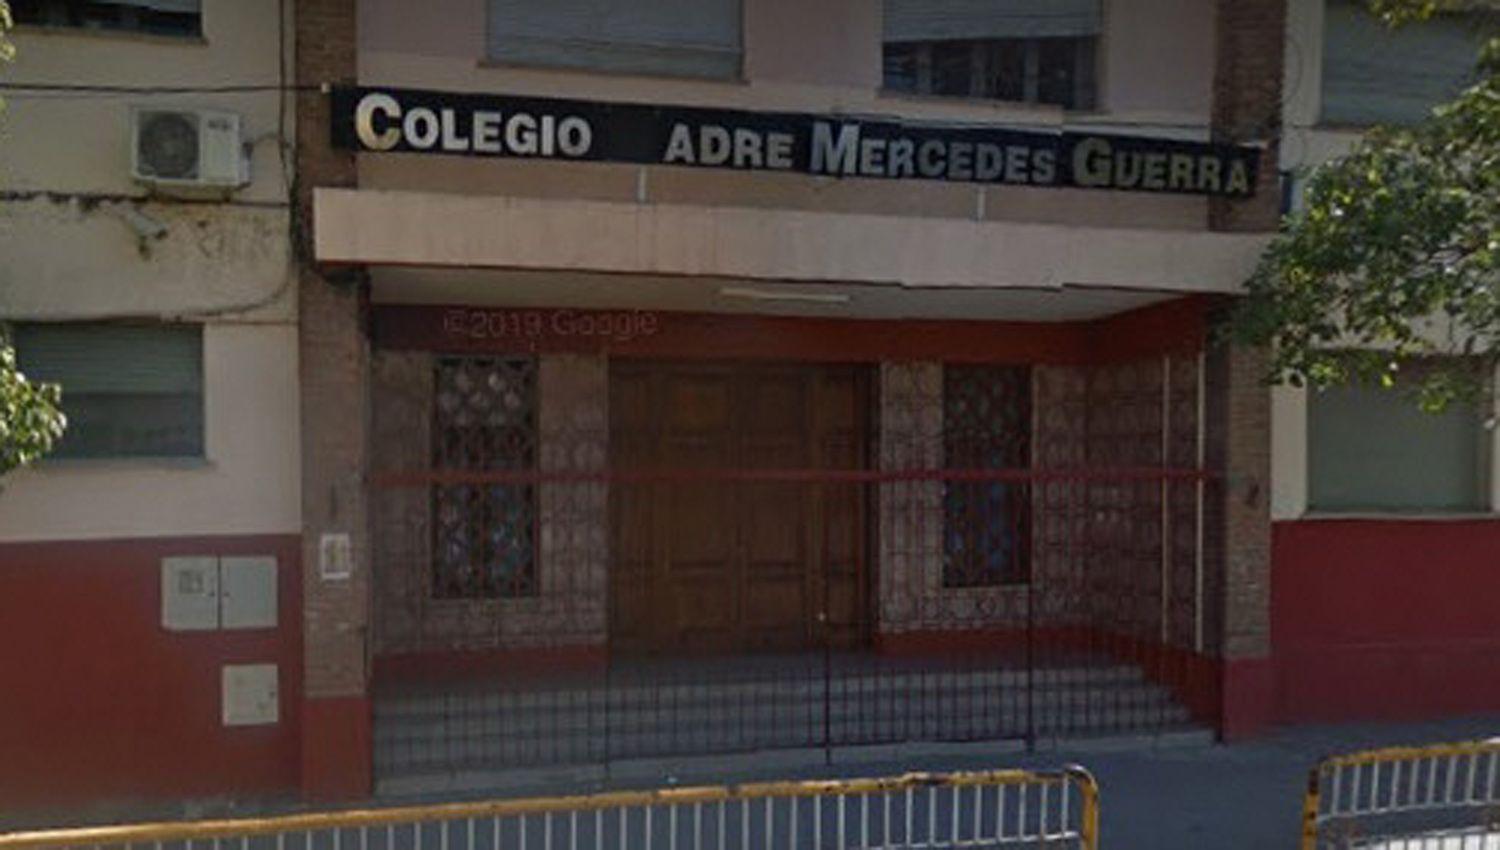 El Colegio Madre Mercedes  Guerra vive un mes especial